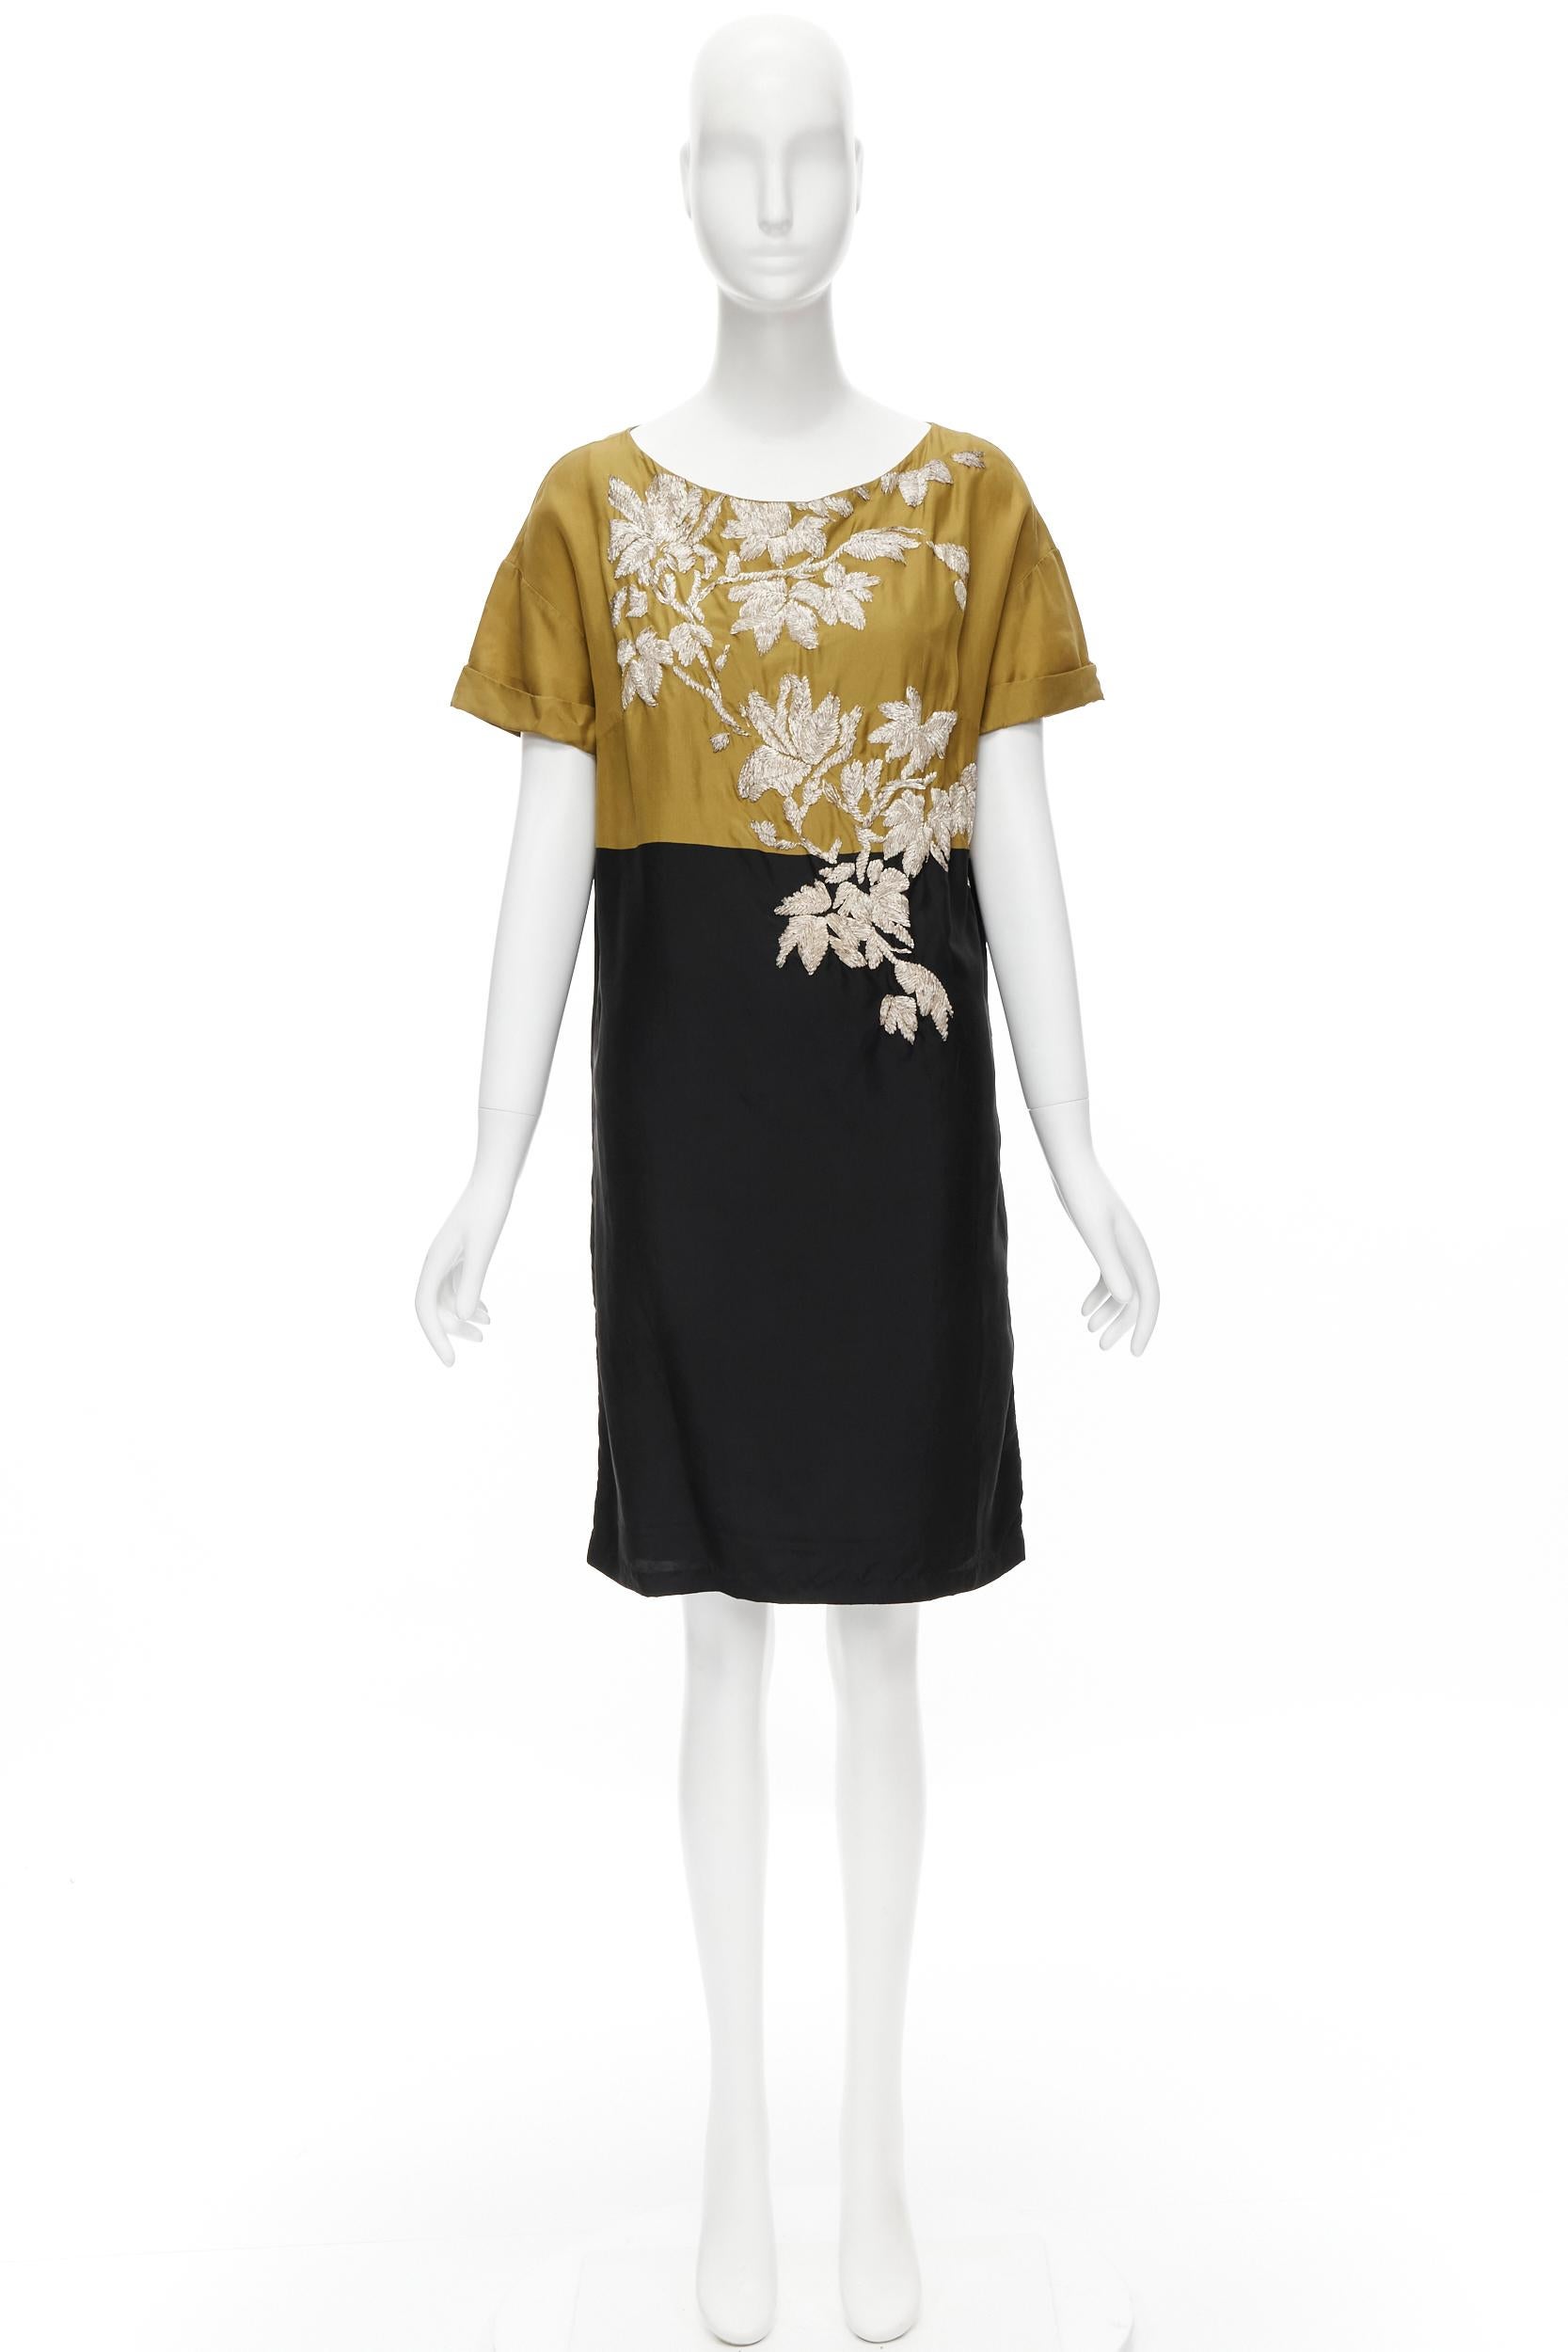 DRIES VAN NOTEN gold black silk gold floral embroidery shift dress FR38 S 4